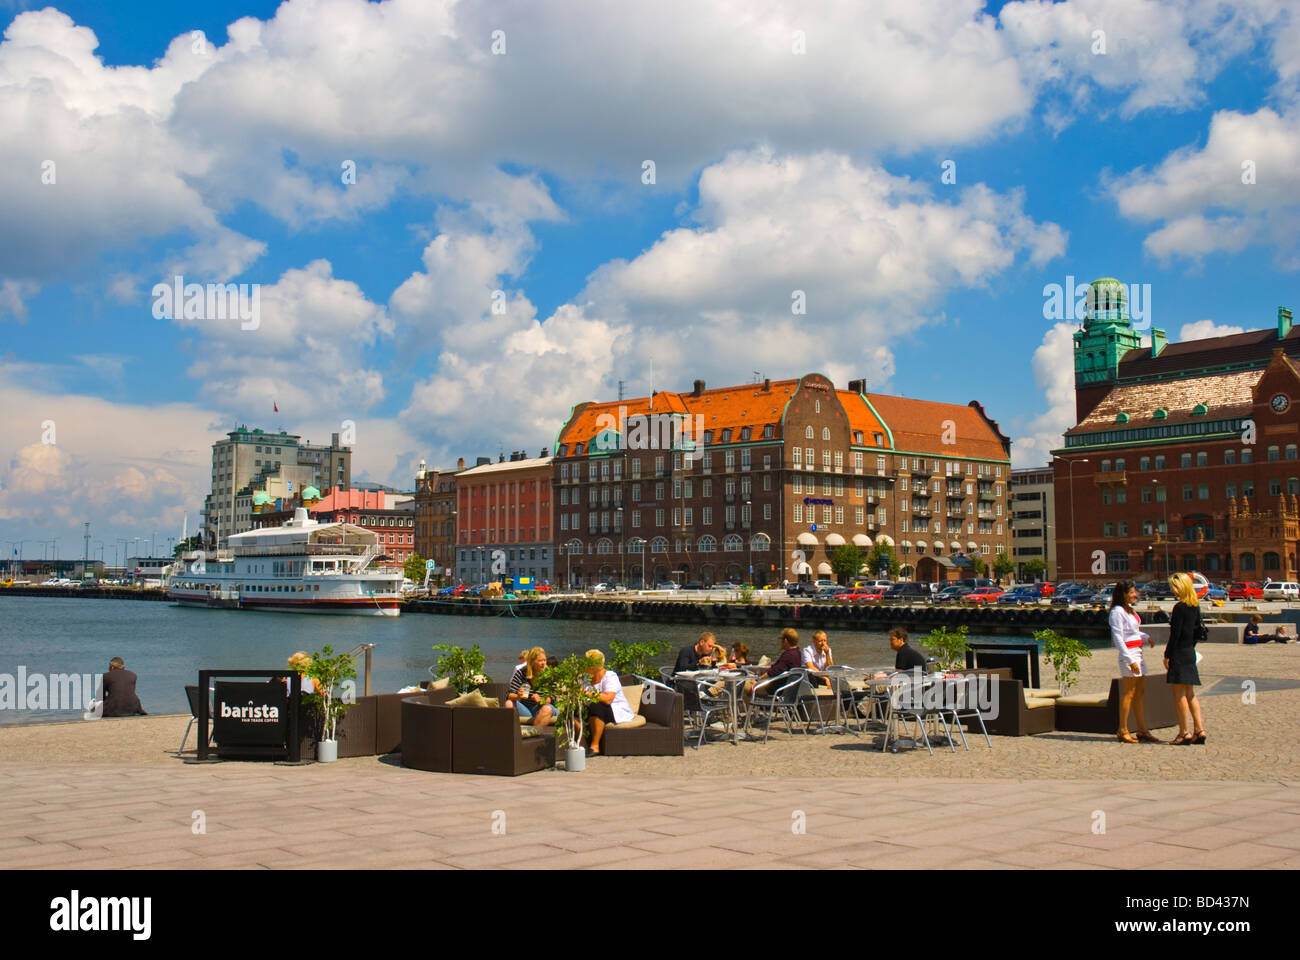 People on cafe terrace at Bagersplats squre at Inre hamnen harbour in Malmö Skåne Sweden Europe Stock Photo